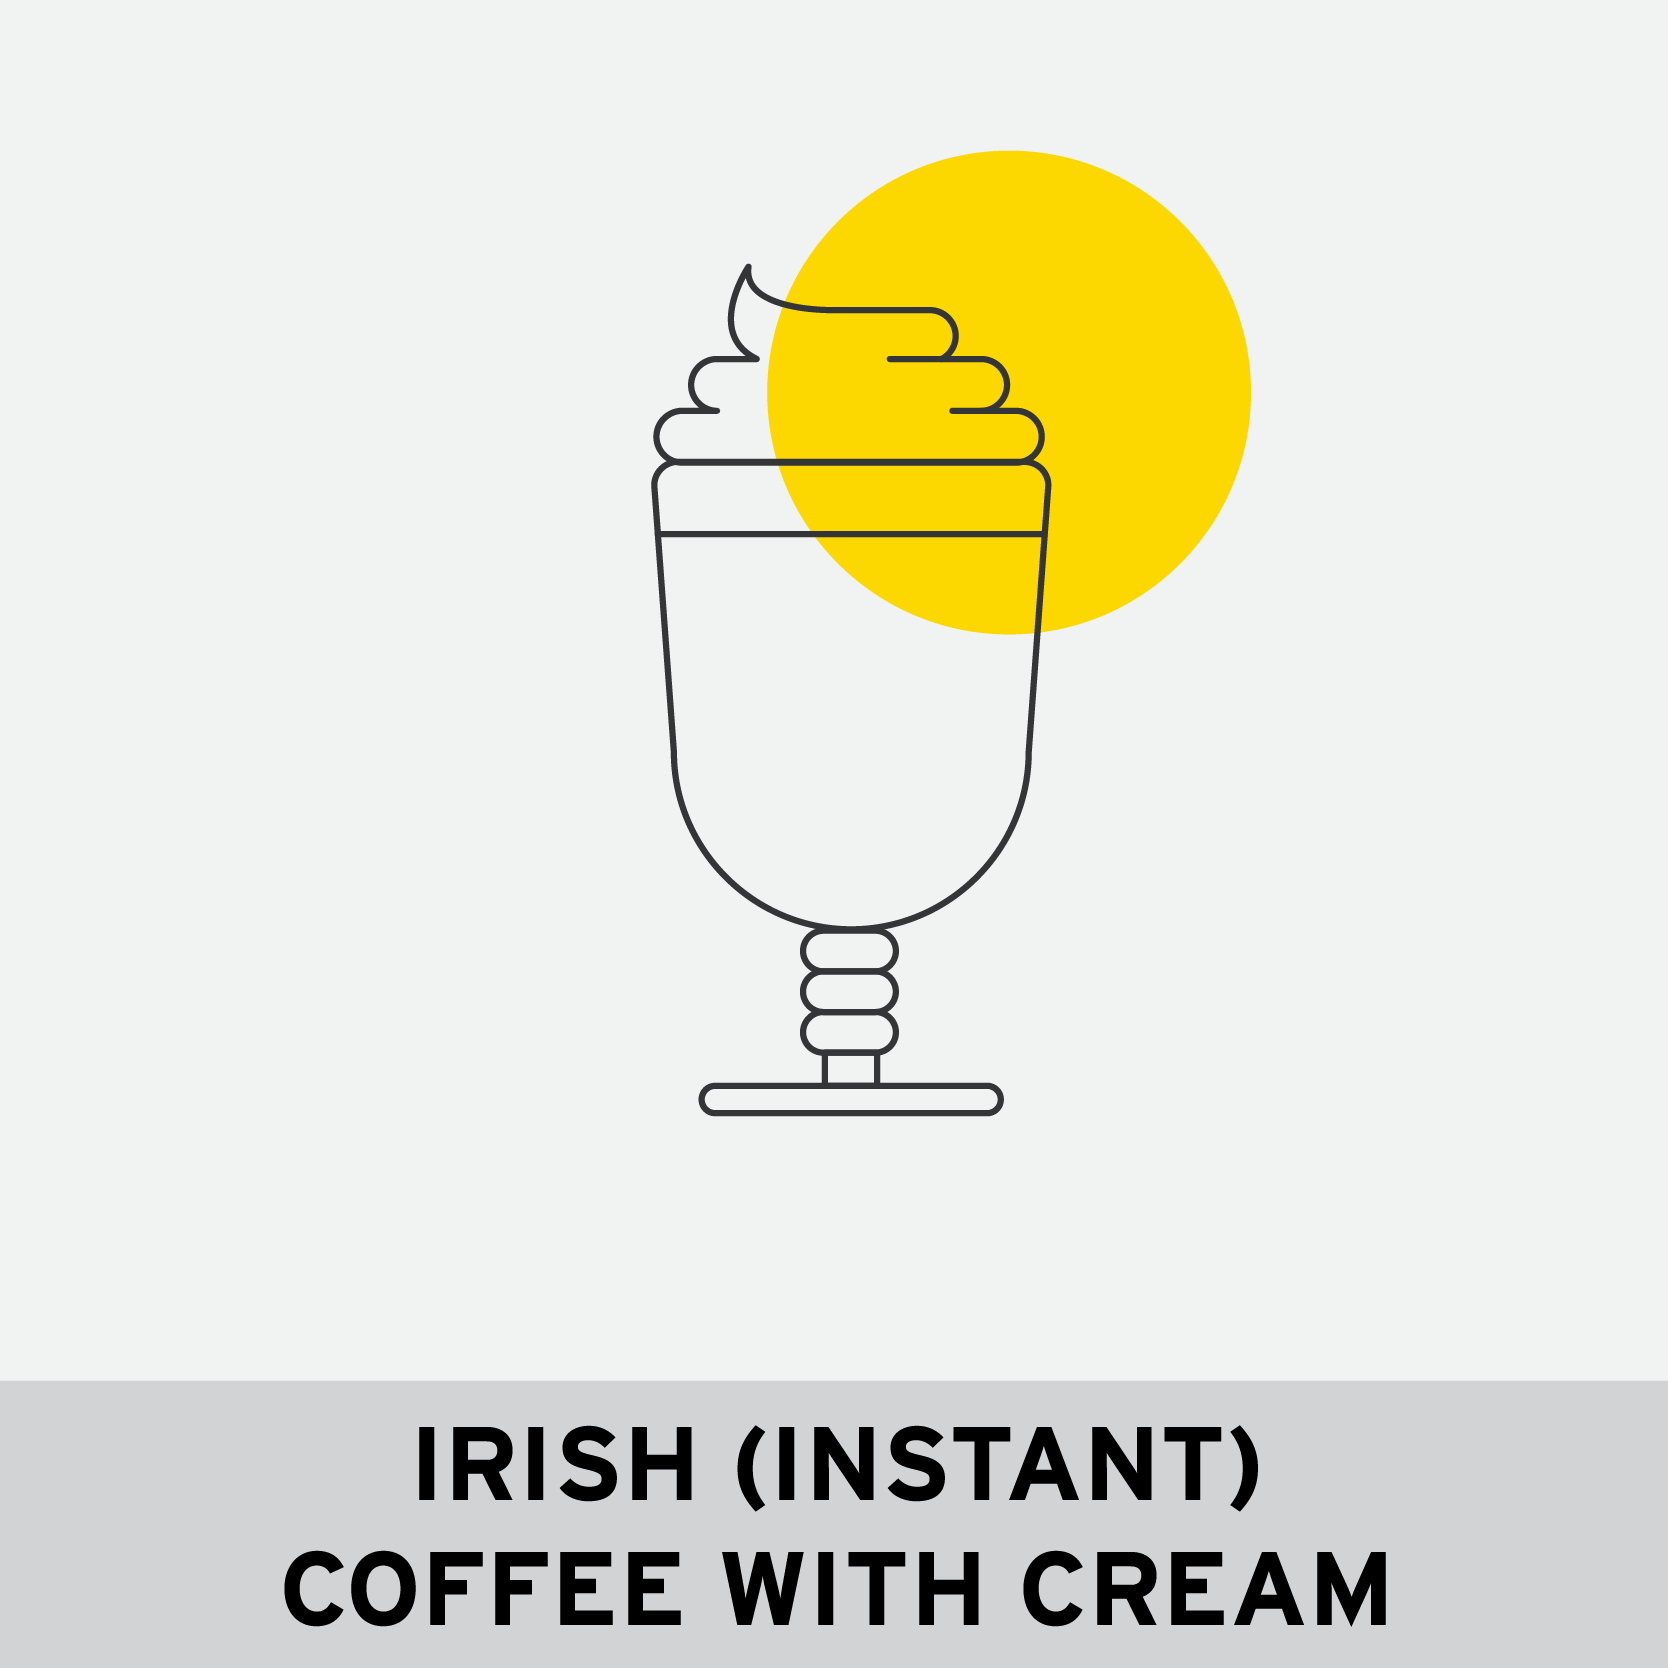 IRISH INSTANT COFFEE WITH CREAM